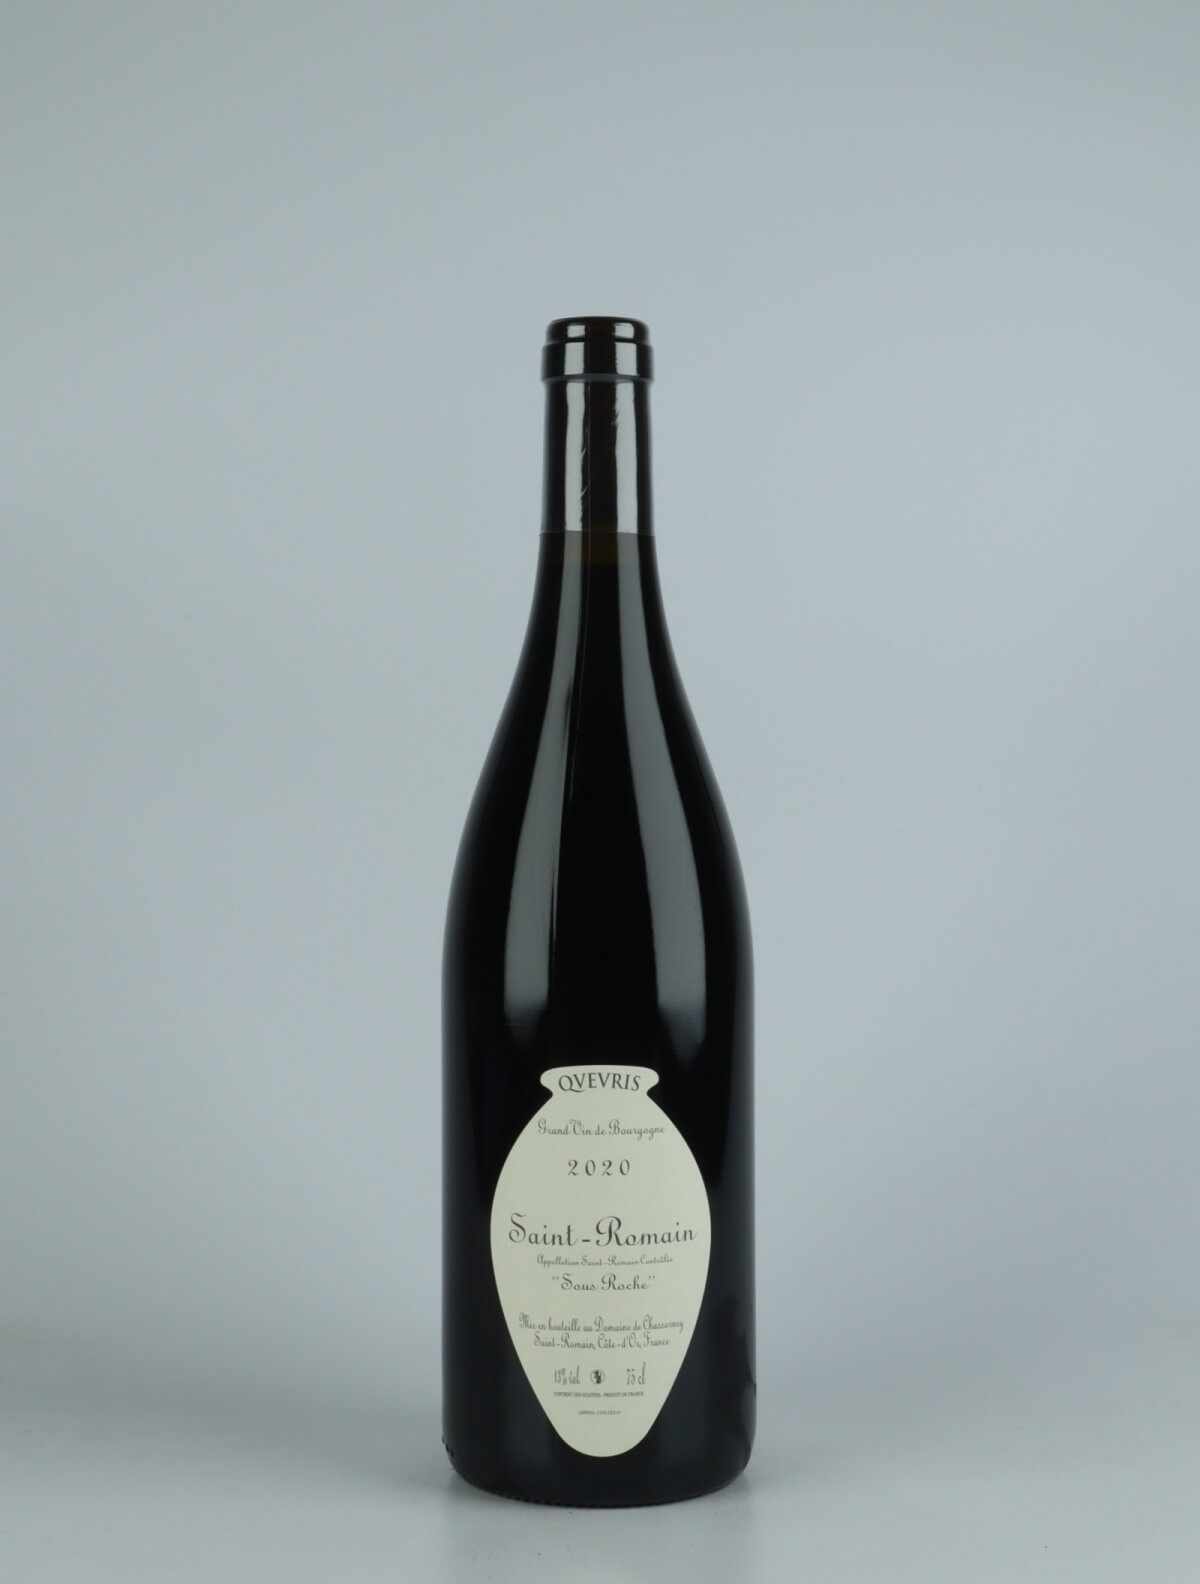 En flaske 2020 Saint Romain Rouge - Sous Roche - Qvevris Rødvin fra Domaine de Chassorney, Bourgogne i Frankrig